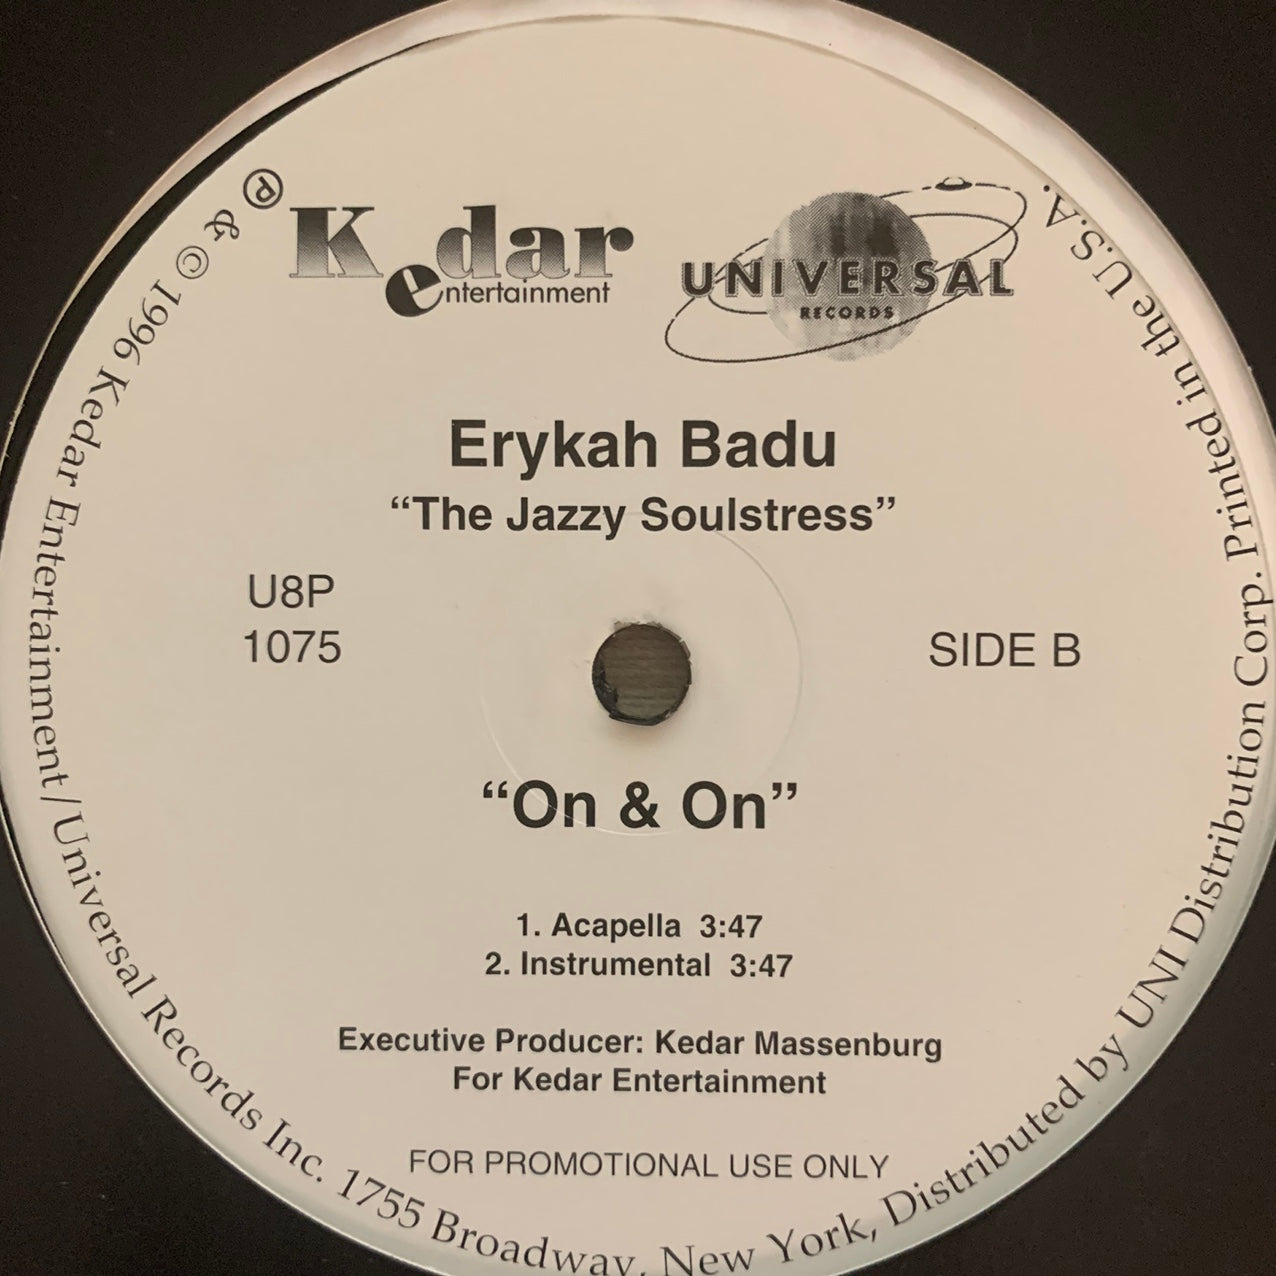 Erykah Badu “On & On” 4 Version 12inch Vinyl